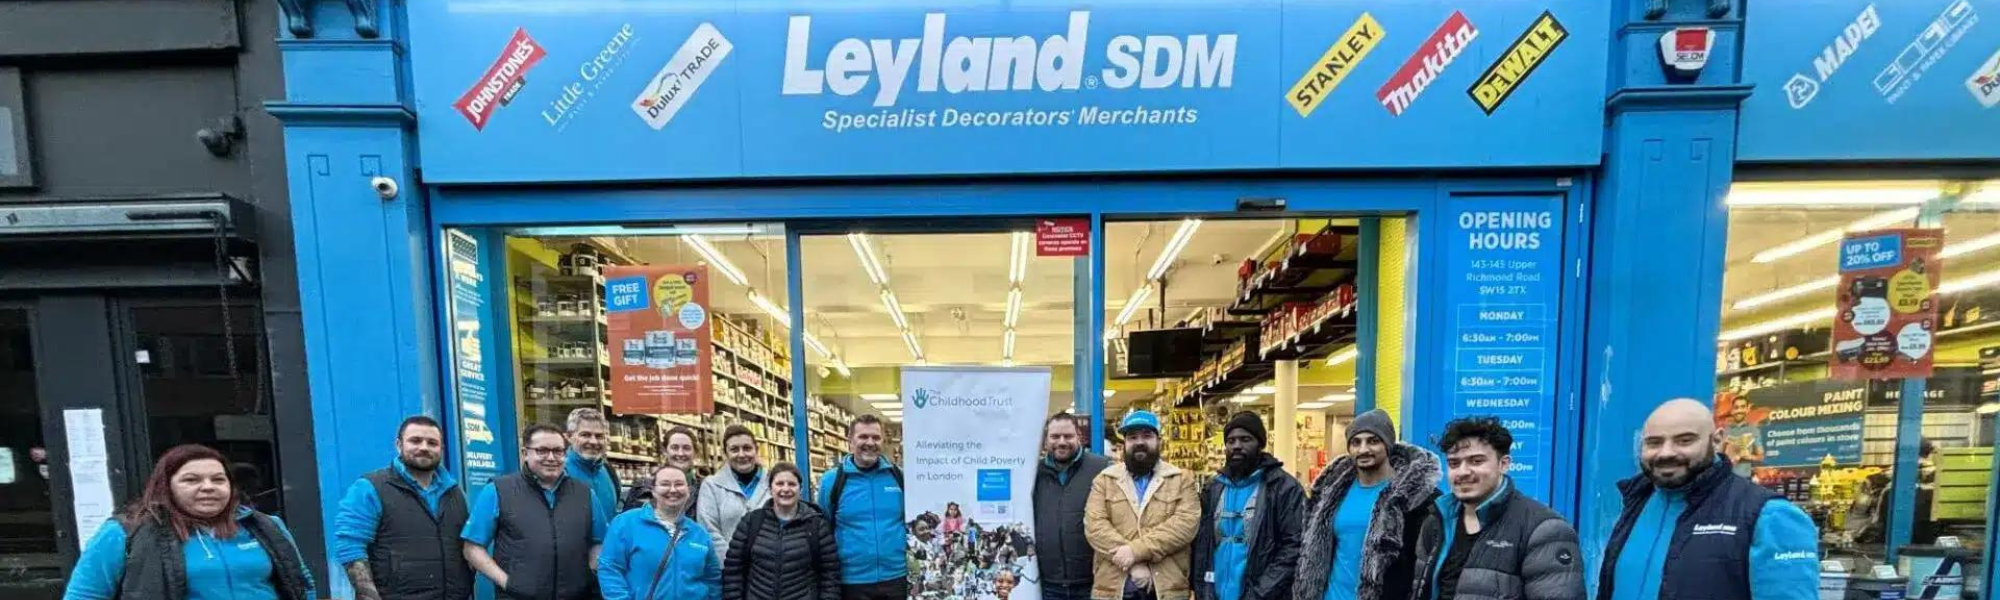 Leyland SDM supports London’s poorest children